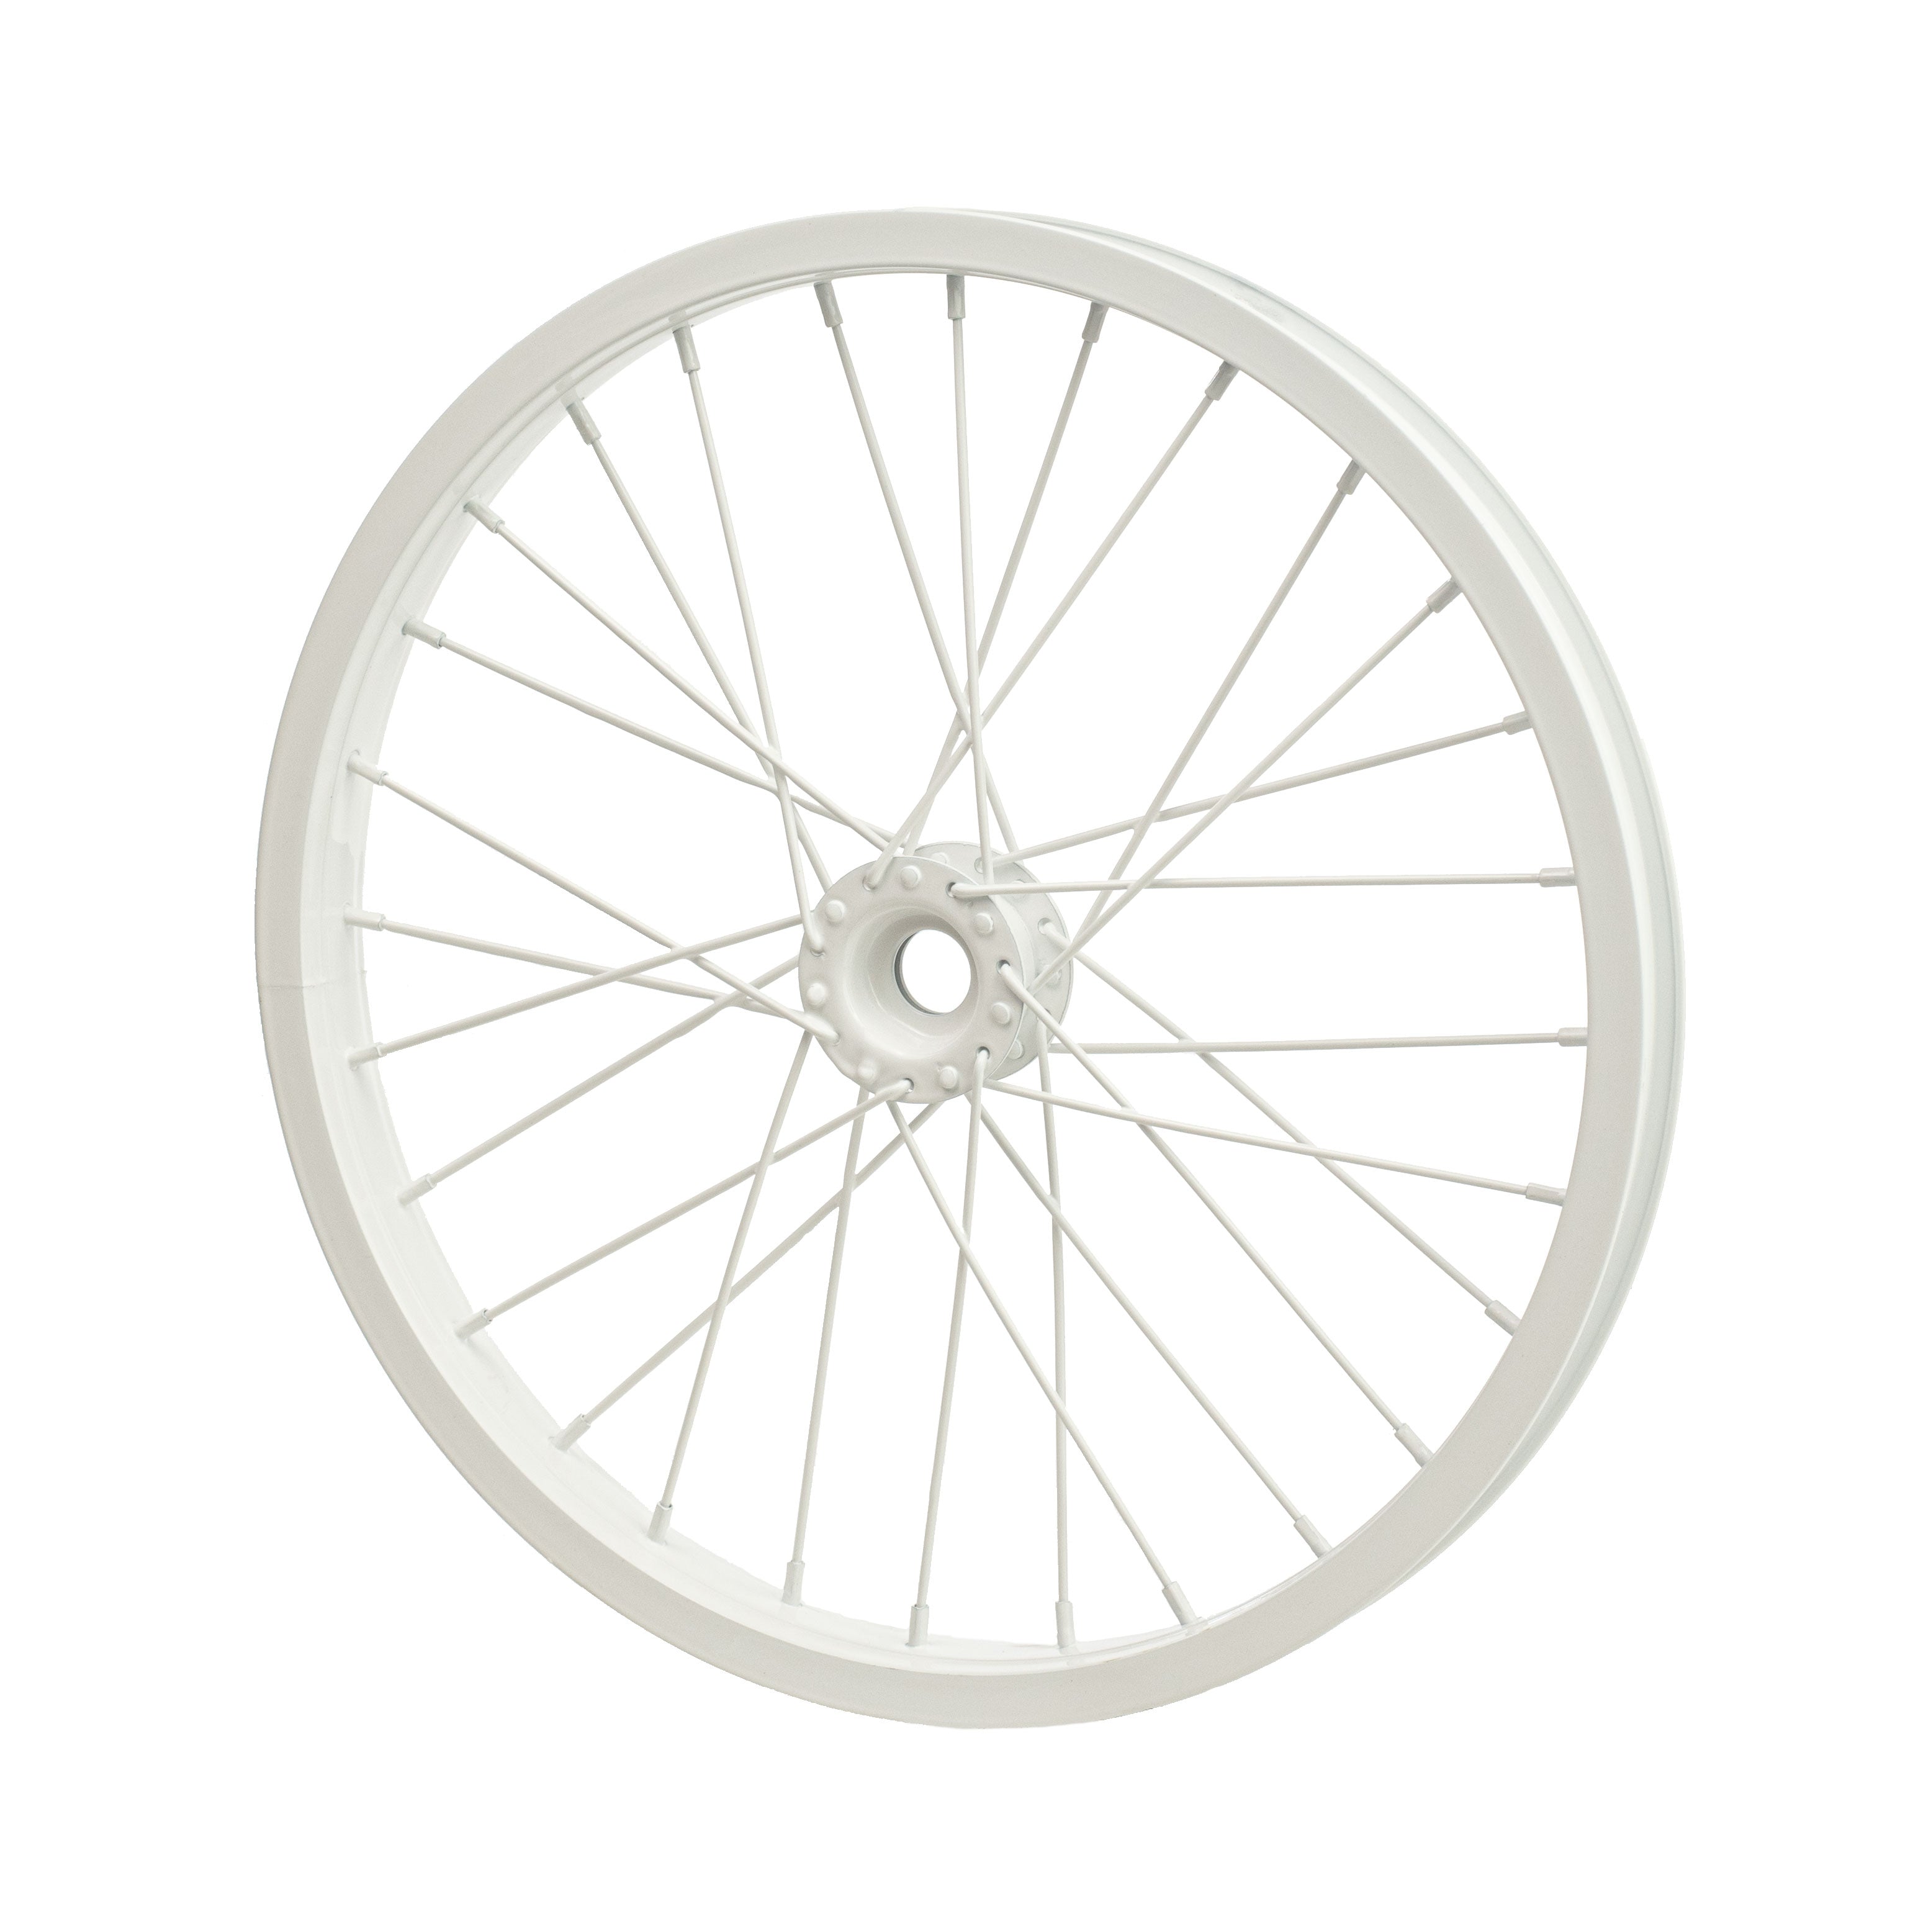 16" Decorative Bicycle Rim: White